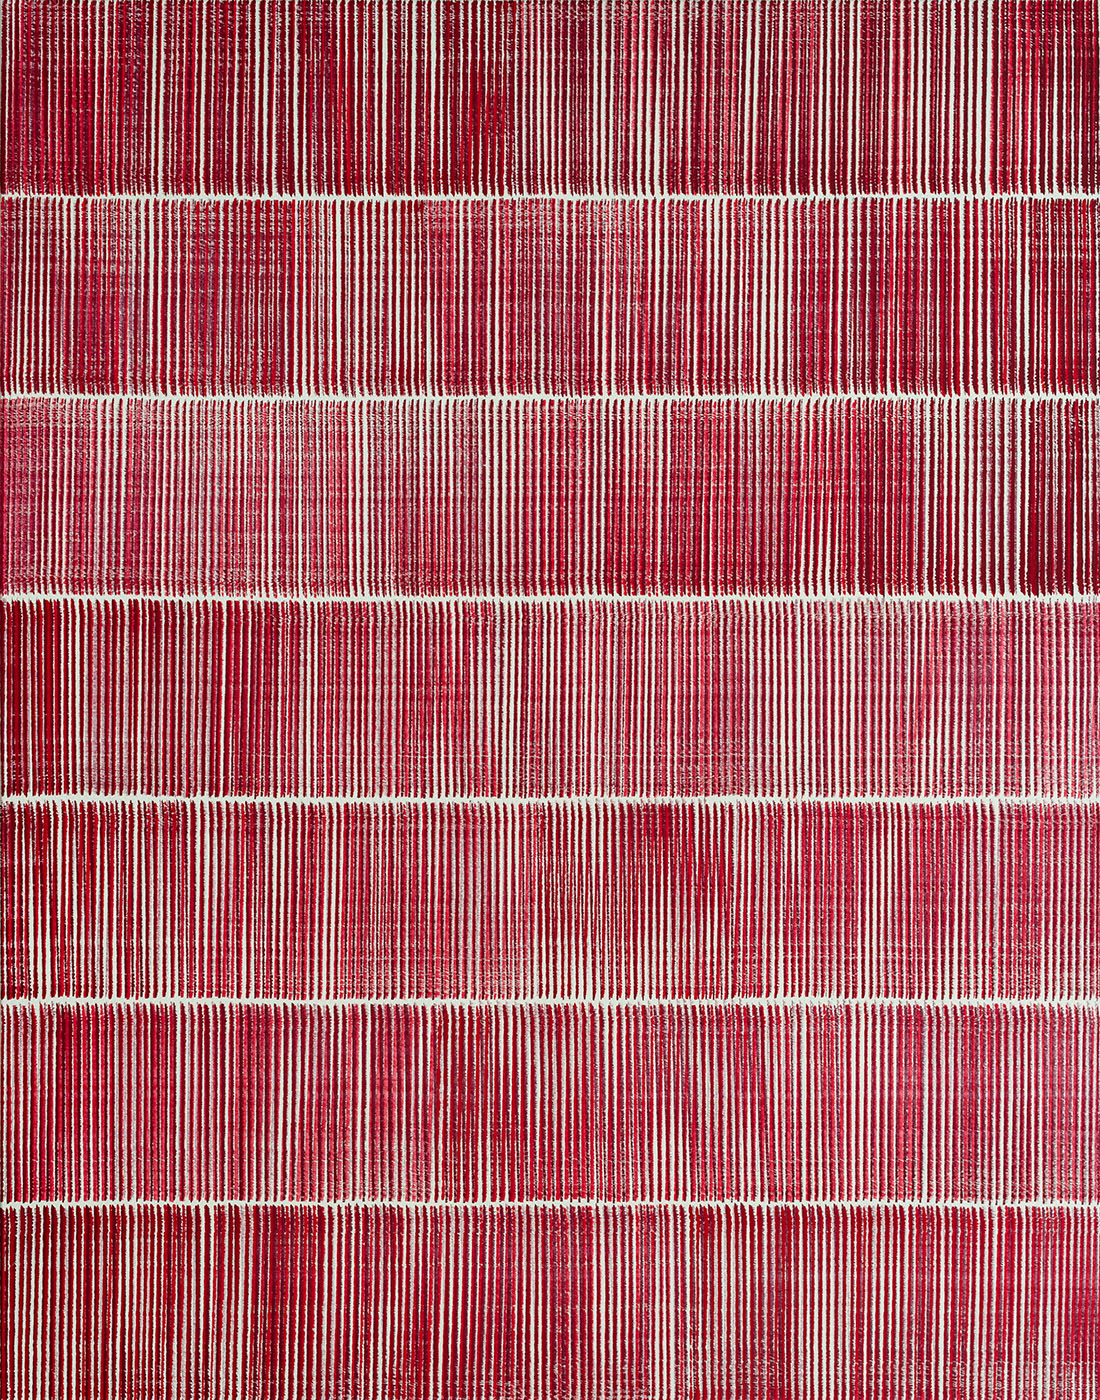 Nikola Dimitrov, Cassandra III, 2019, Pigmente, Bindemittel auf Leinwand, 140 × 110 cm